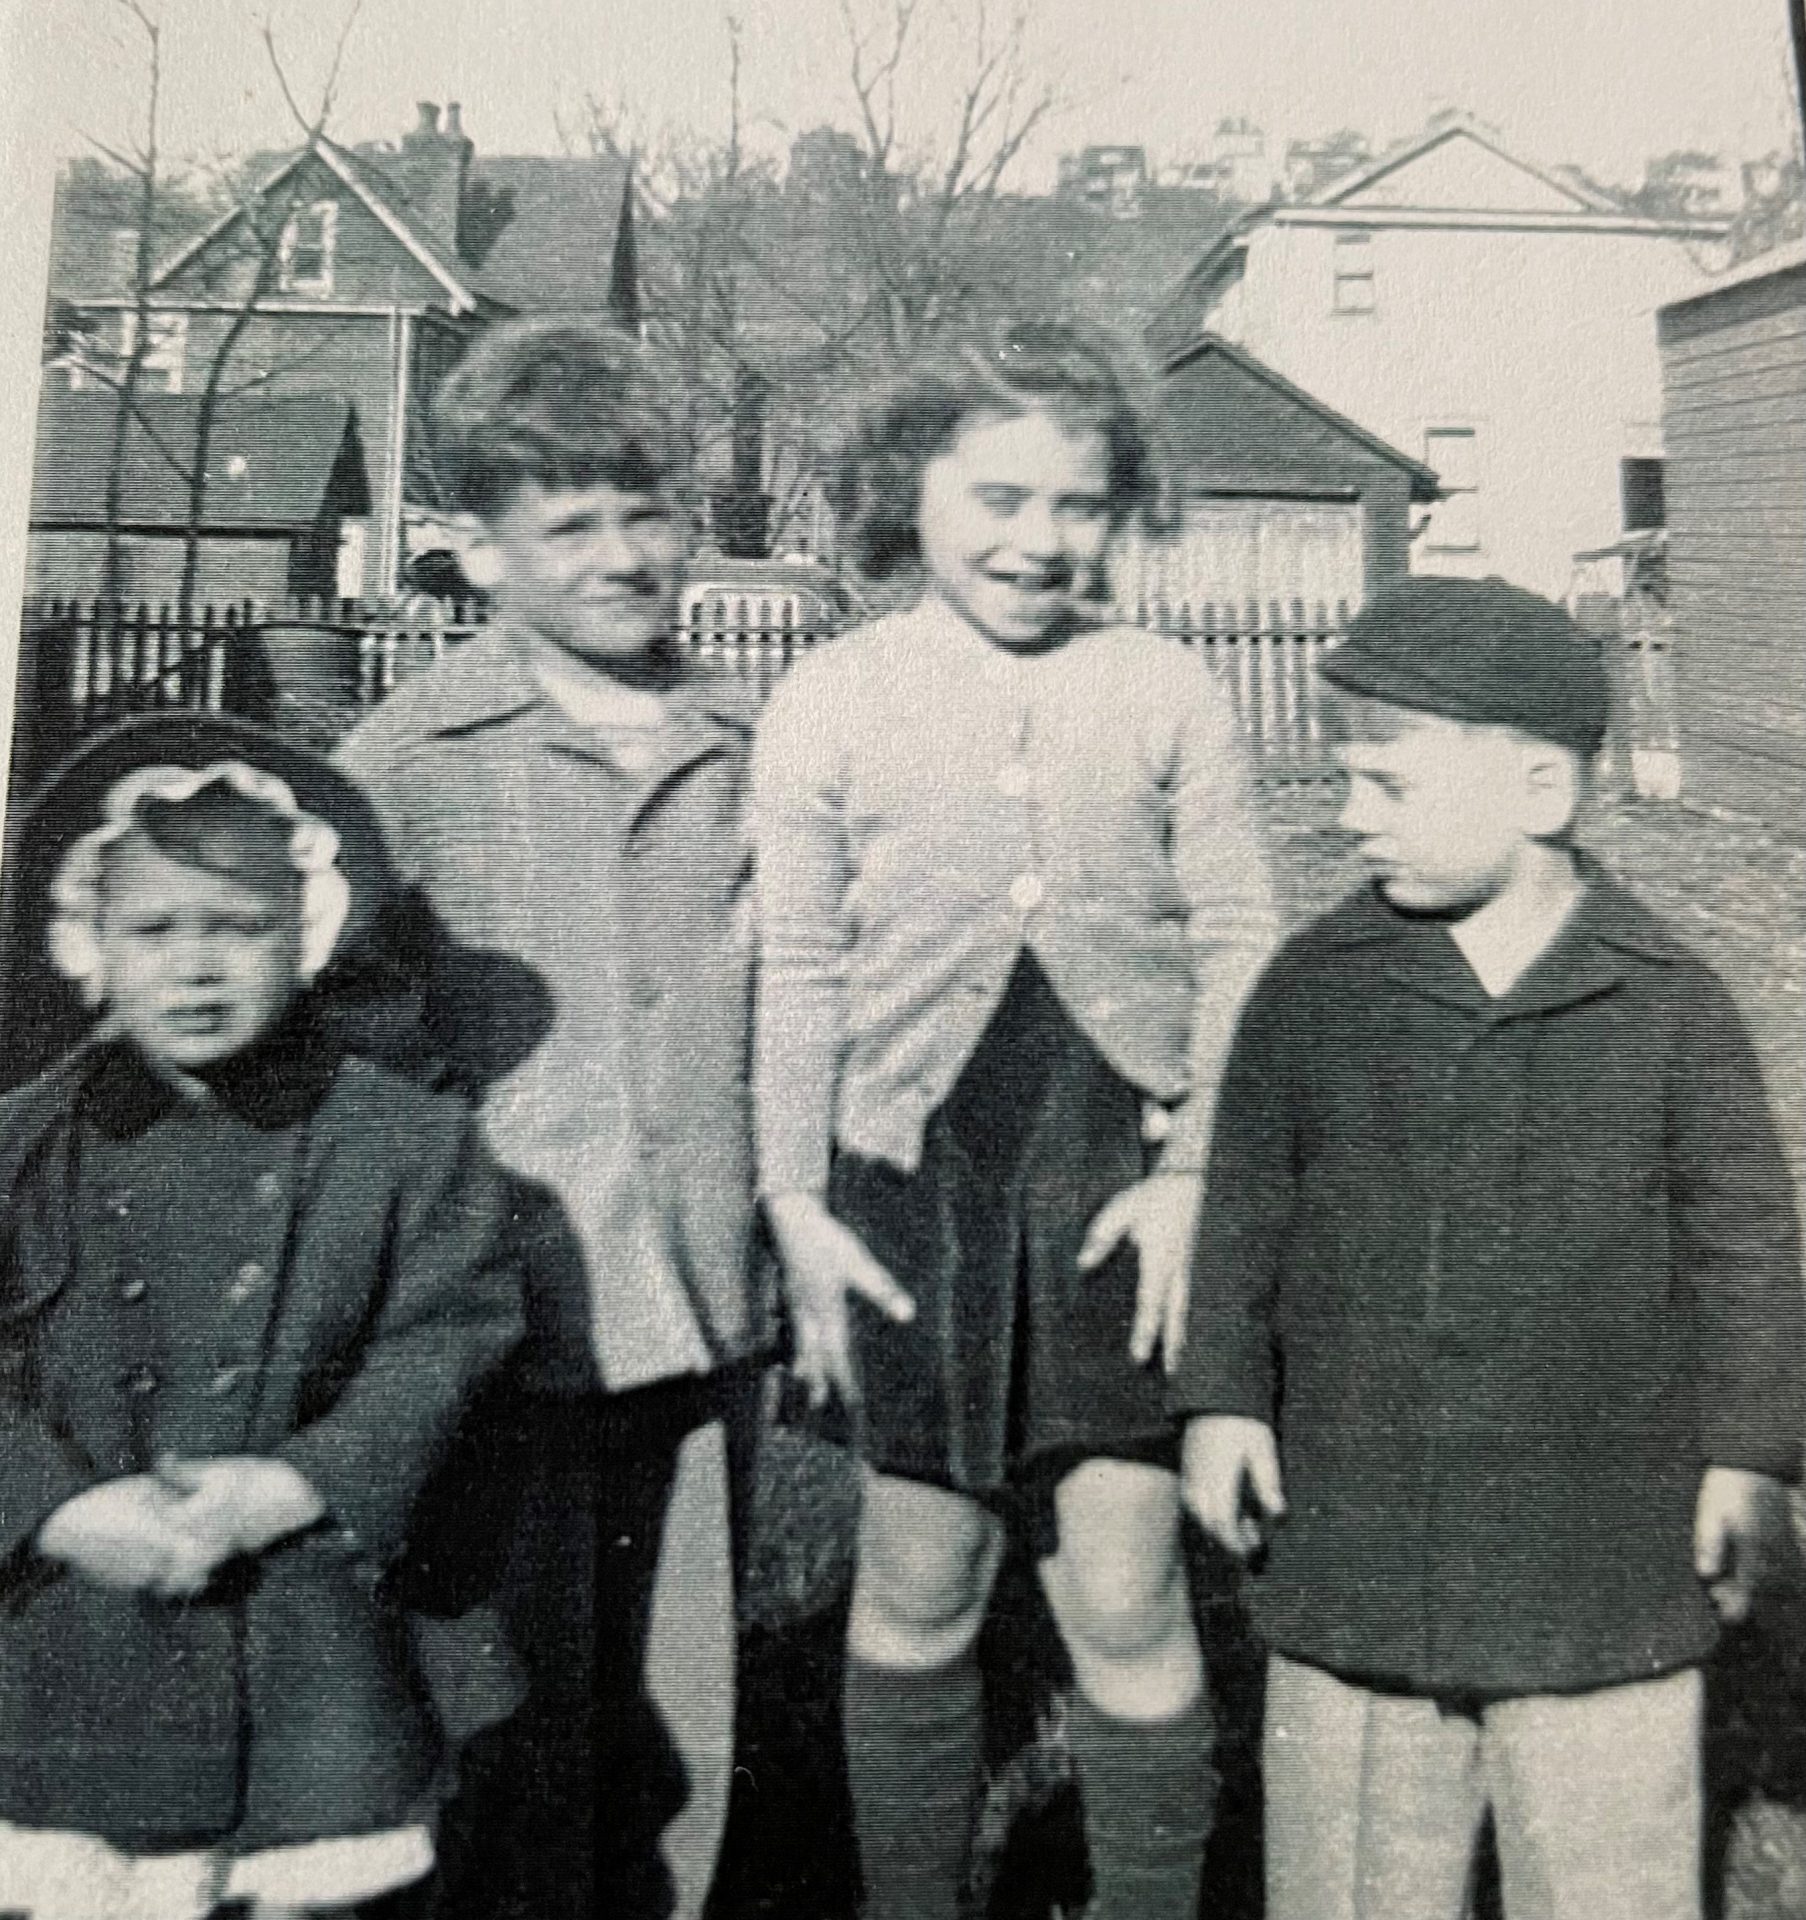 Barbara Ann, Billy, Jean, and Ralph as kids